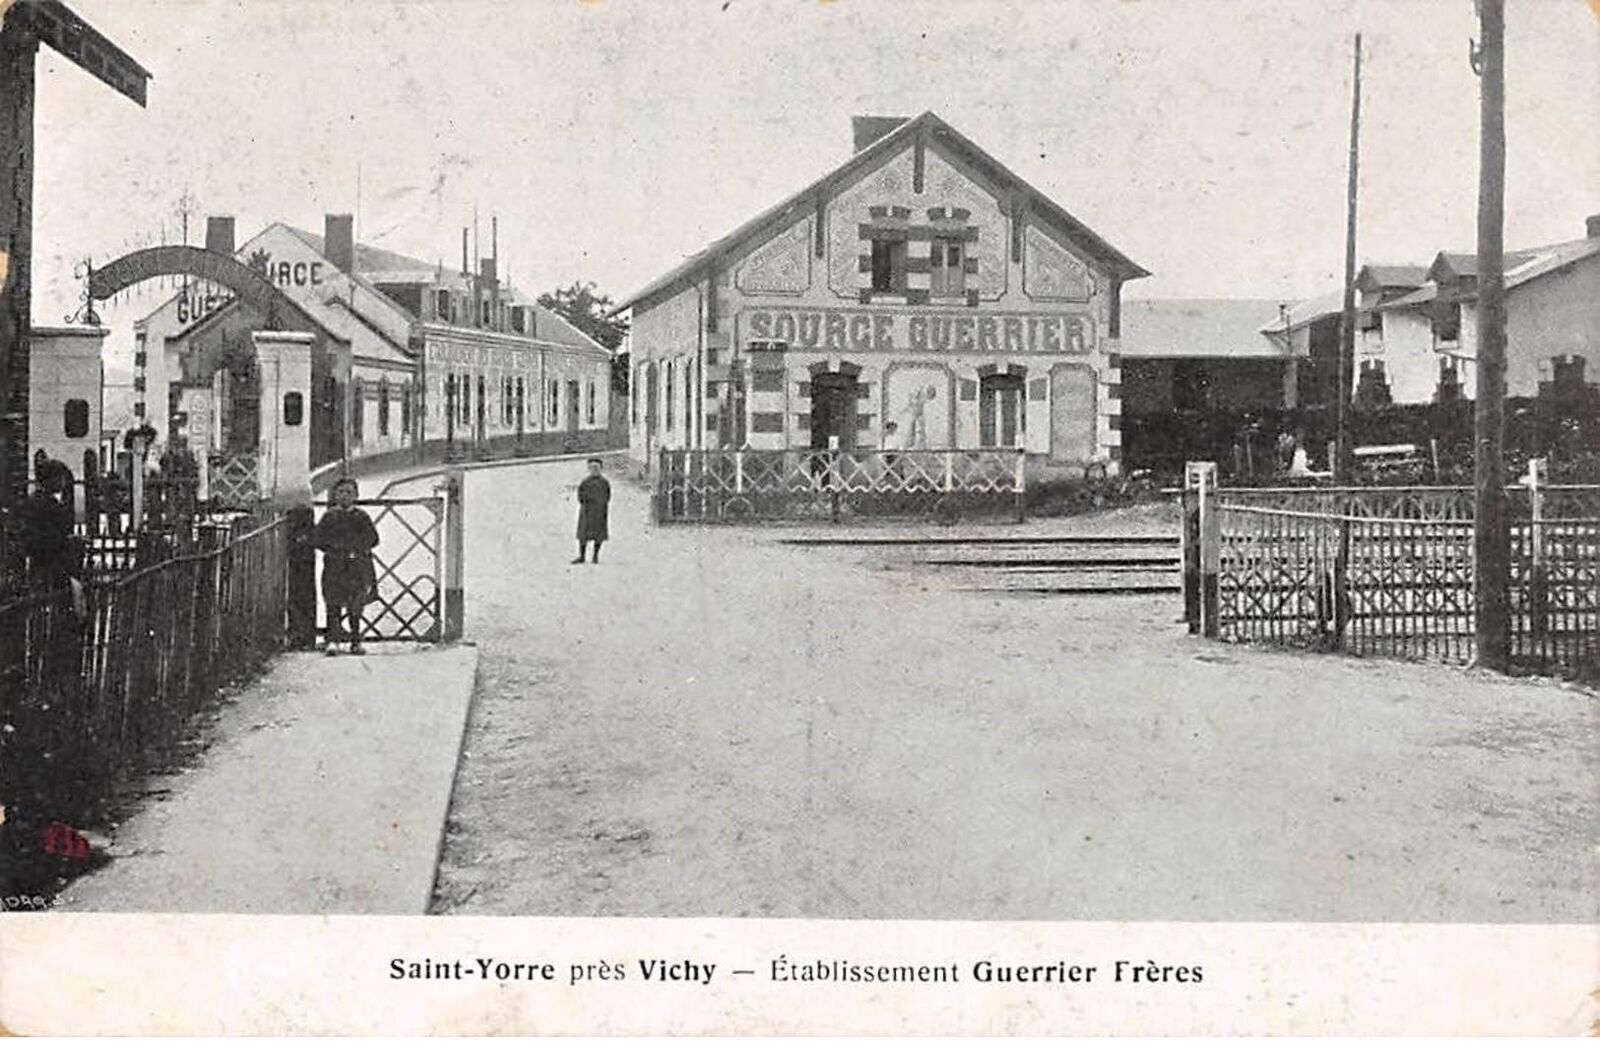 03 - SAINT YORRE - SAN44413 - Near Vichy - Brothers Warrior Establishment